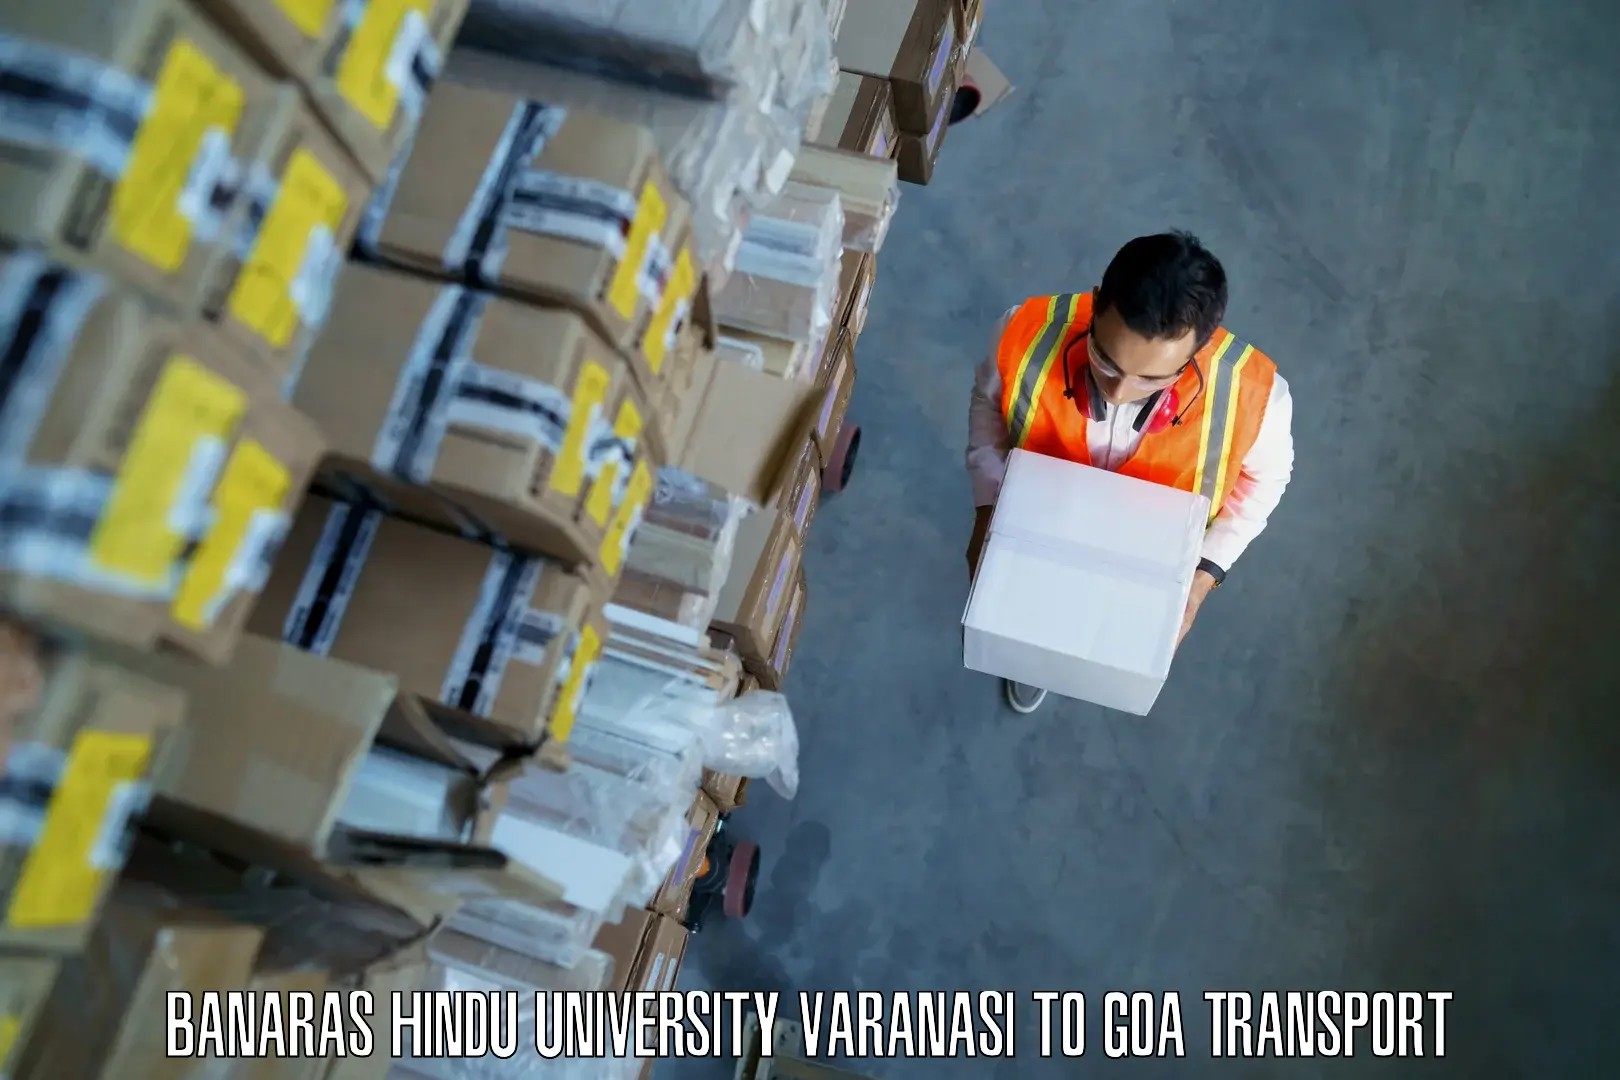 Daily parcel service transport in Banaras Hindu University Varanasi to South Goa